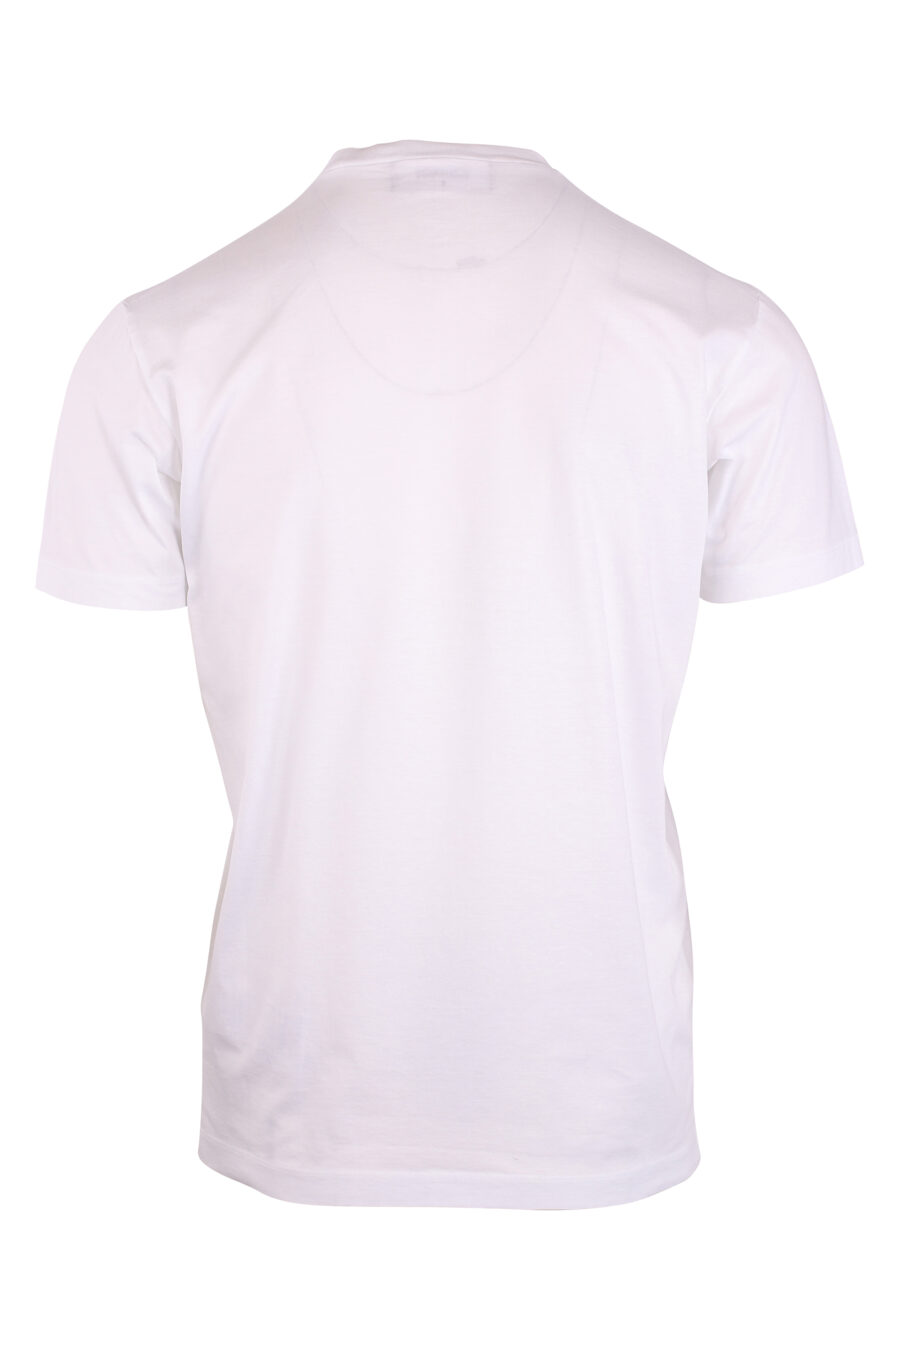 Camiseta blanca con logo "icon surfer" - IMG 8886